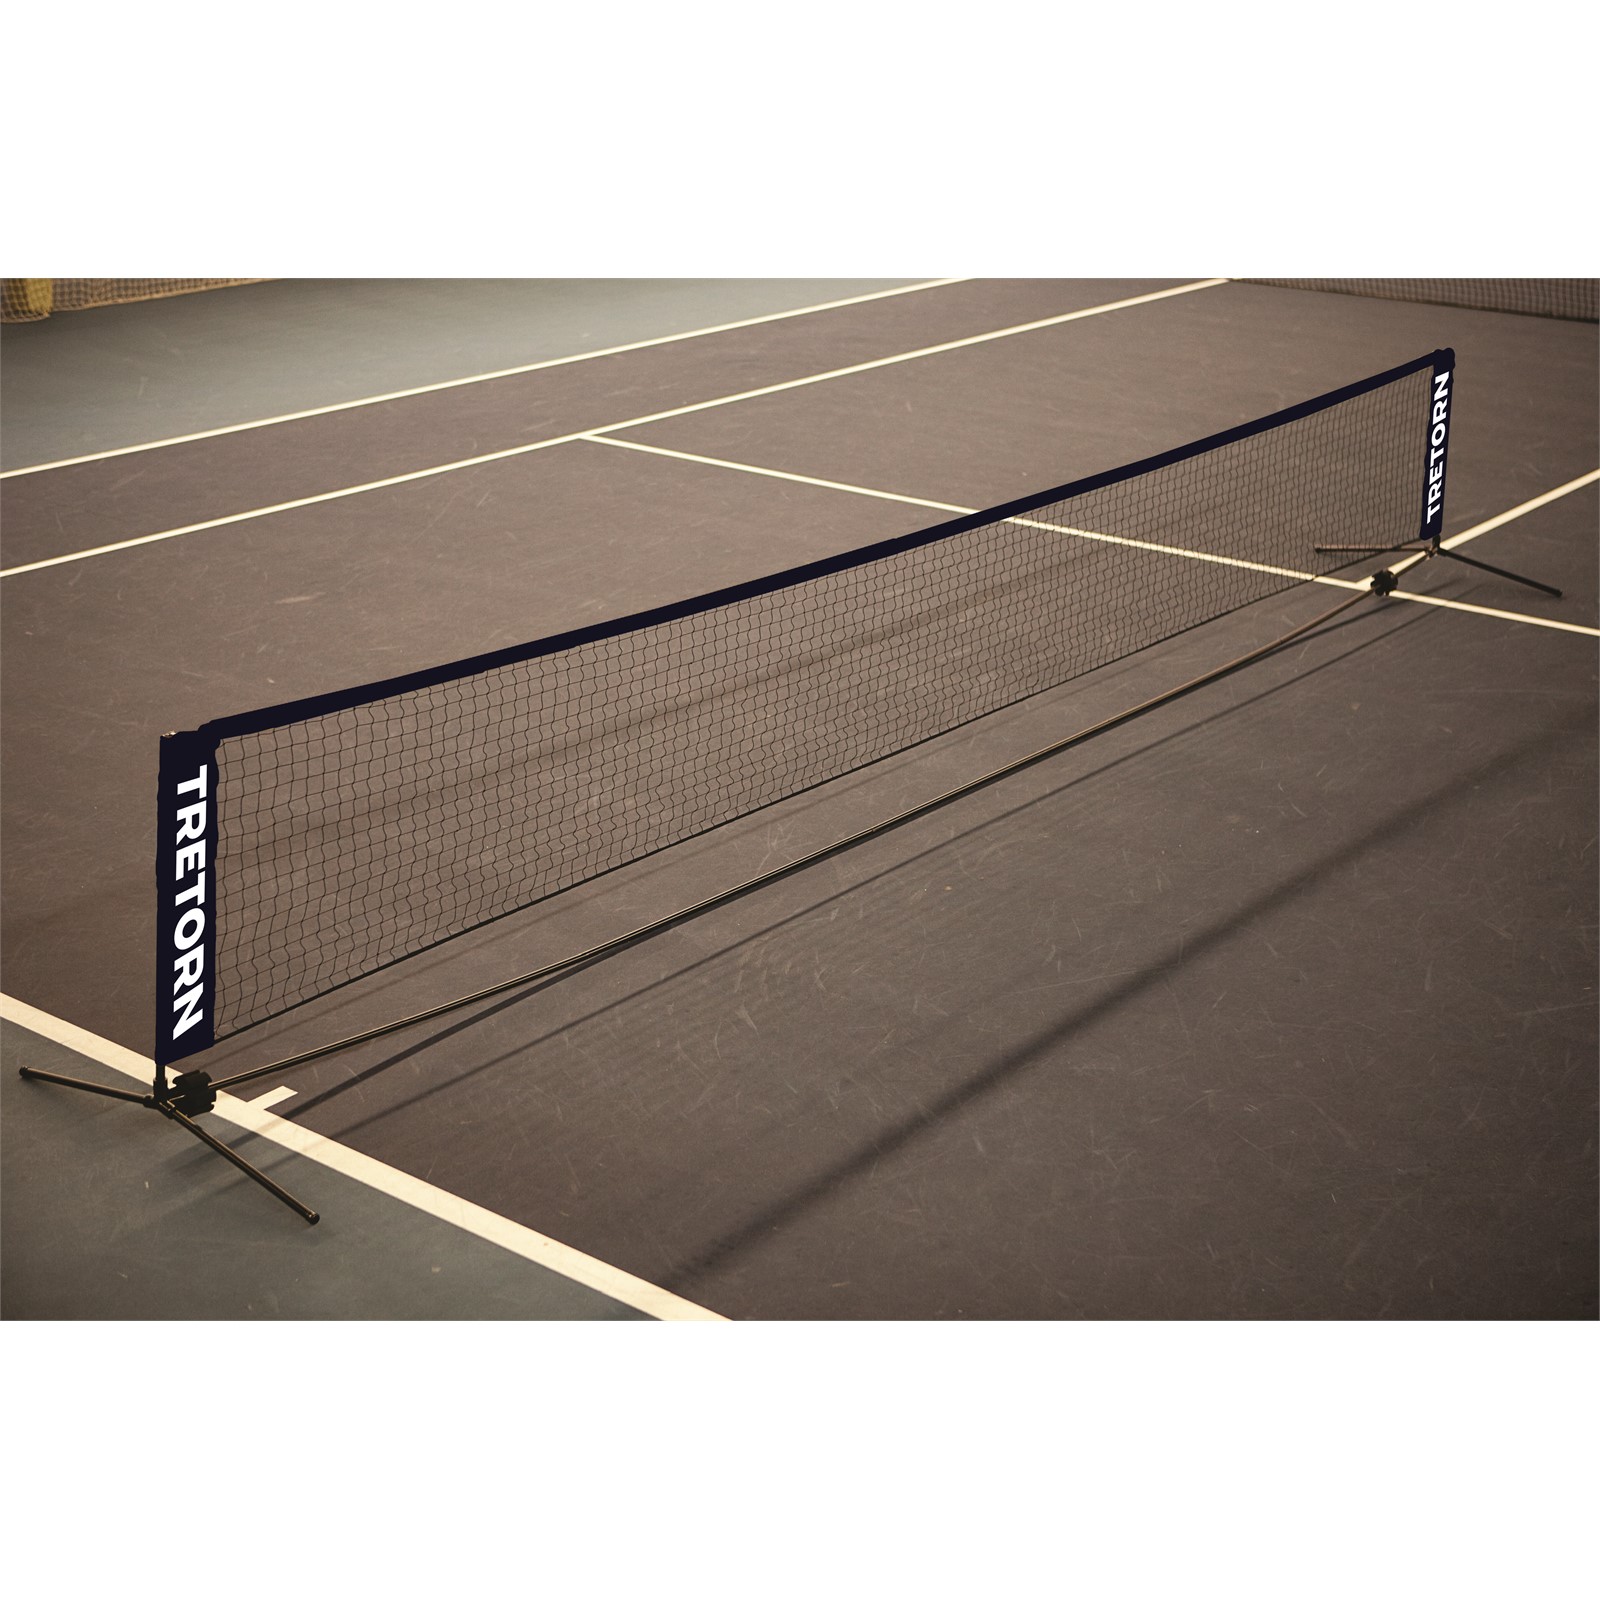 Mini-Tennis Net 6 Meter